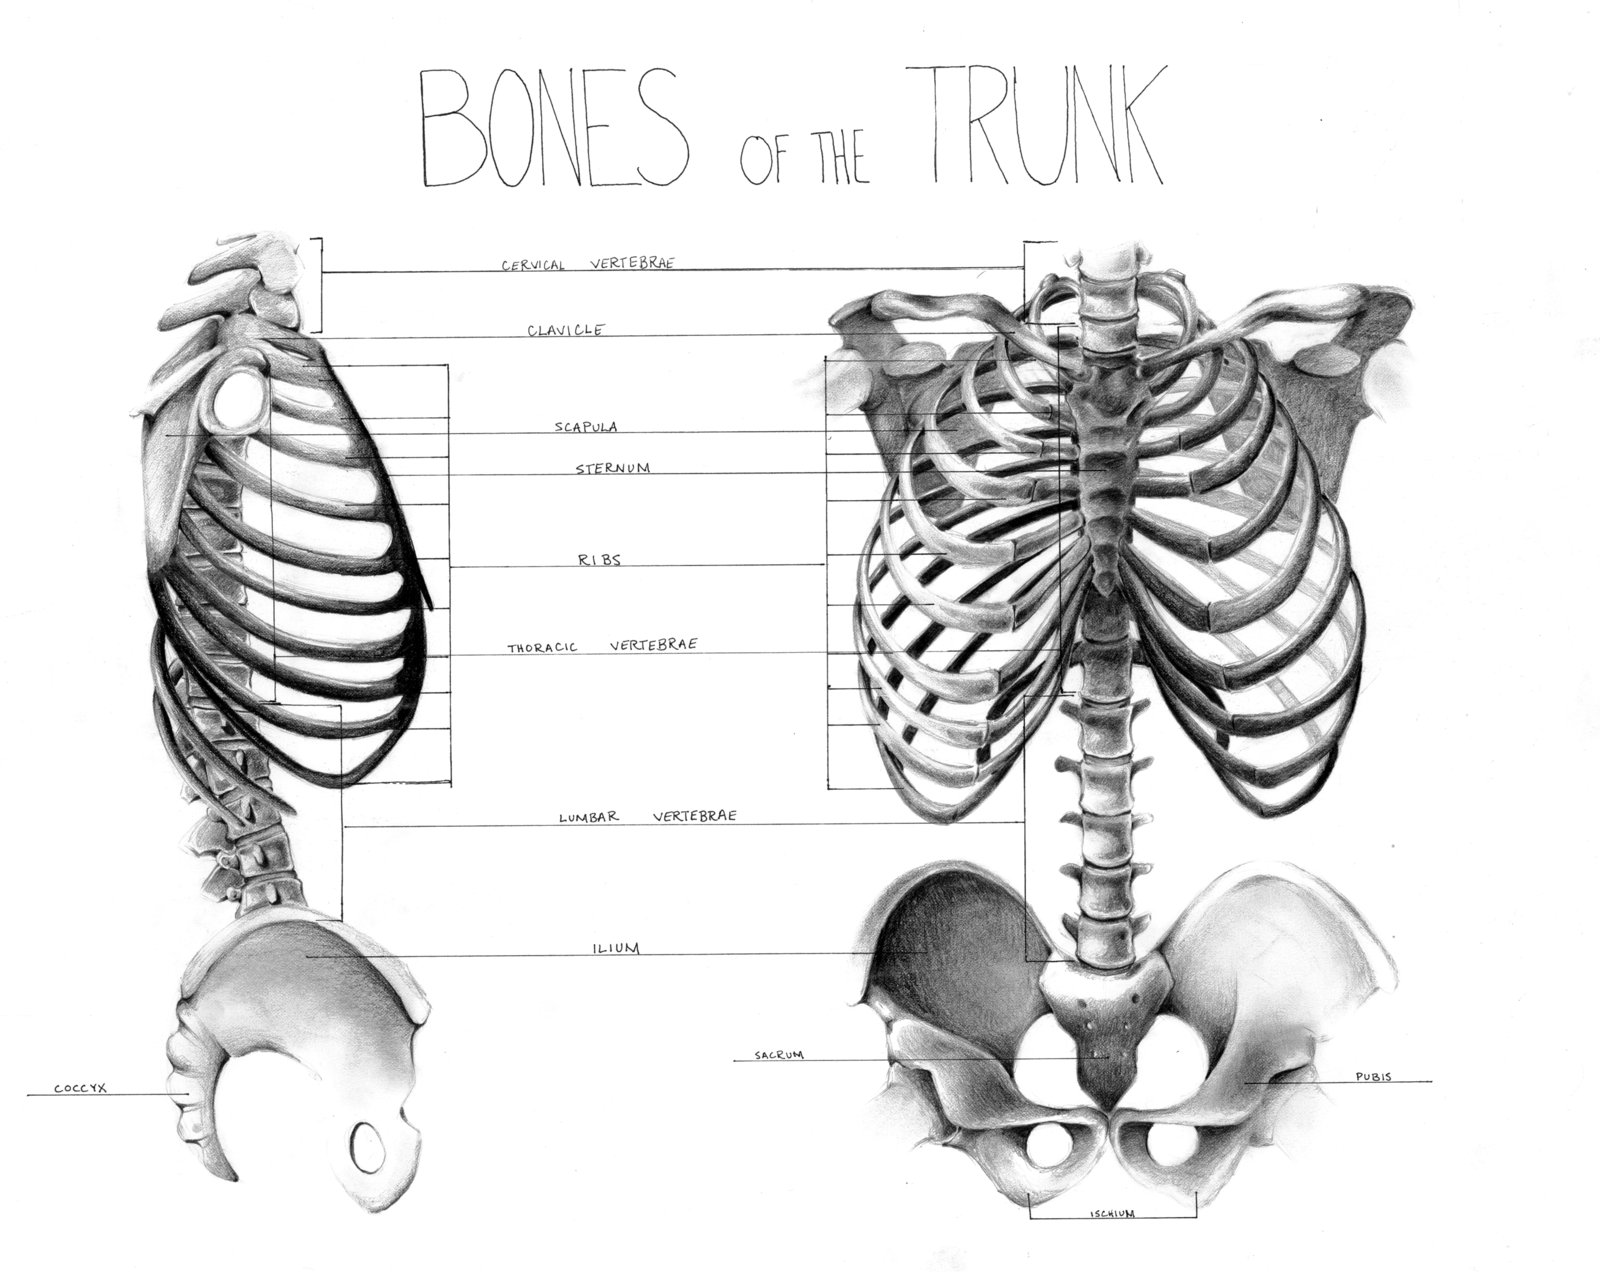 Bones of the Trunk by JREAGANA on DeviantArt